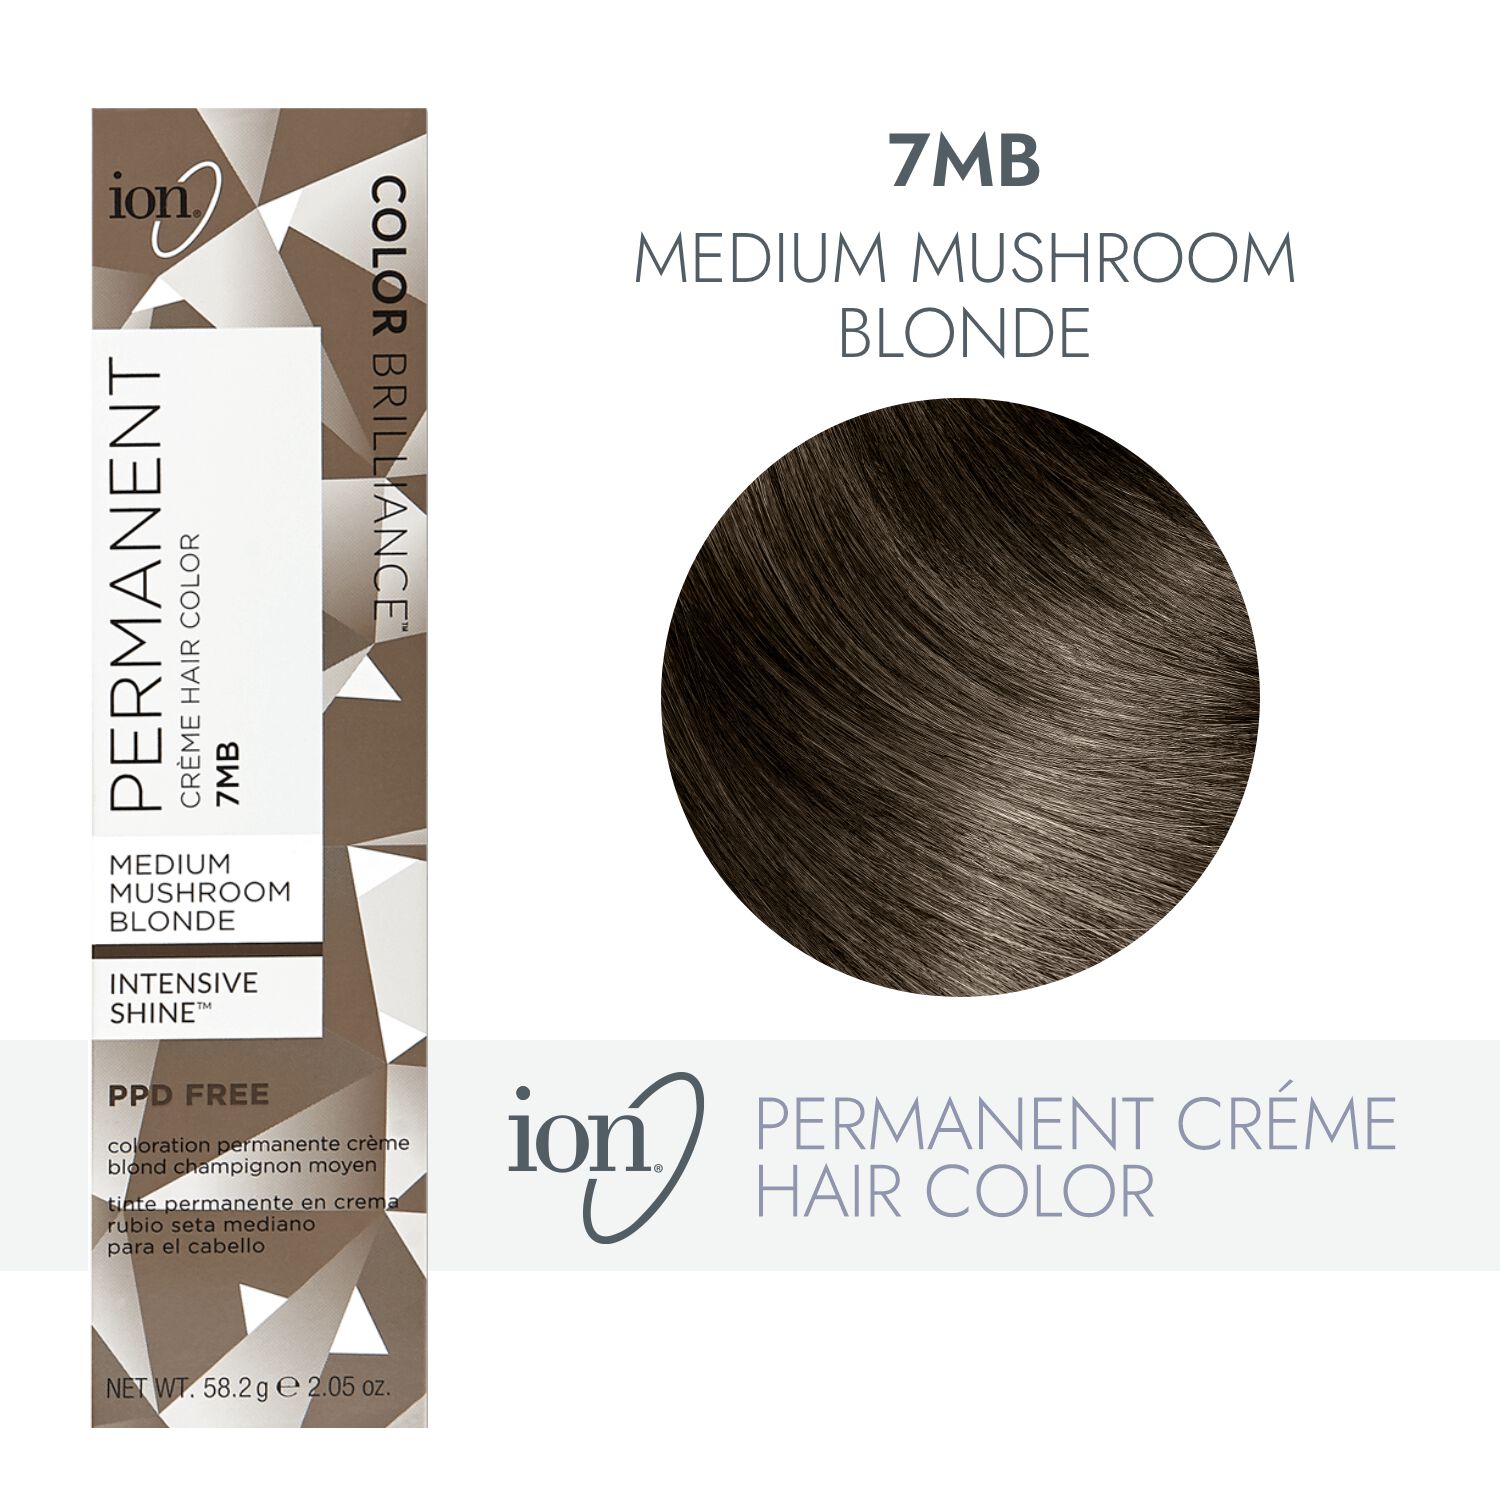 ion 7MB Medium Mushroom Blonde Permanent Creme Hair Color